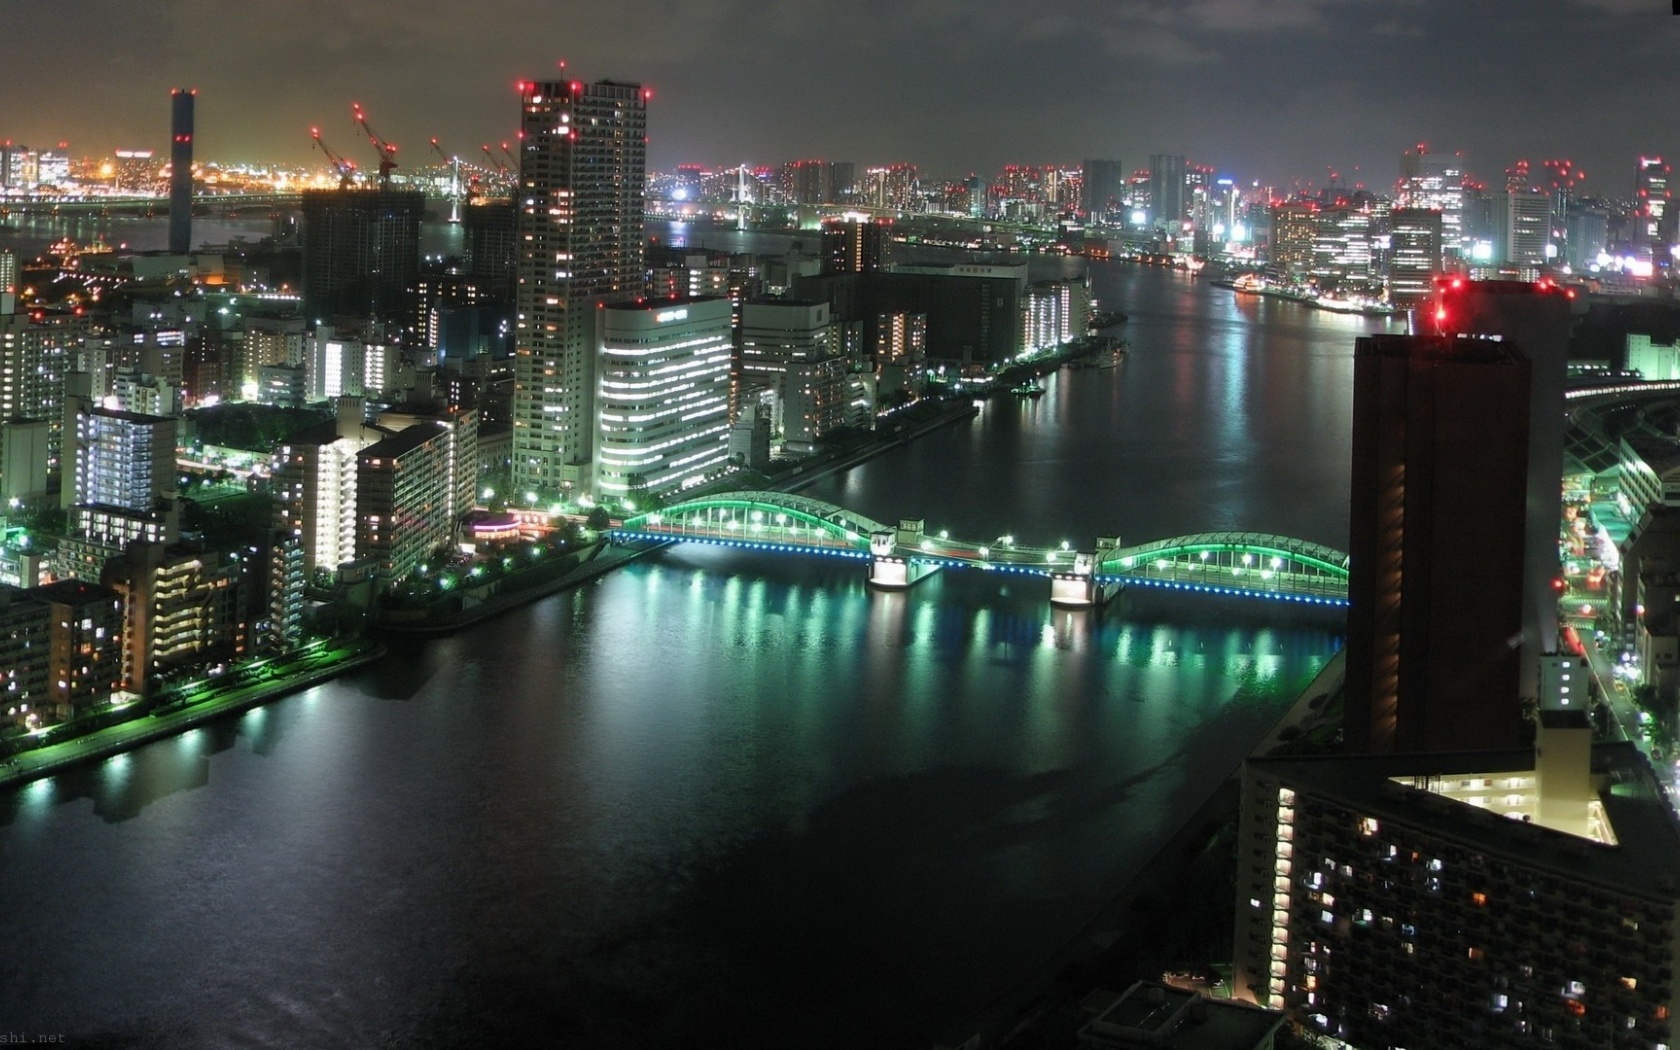 Tokyo Bridge River Building Night City Landscape